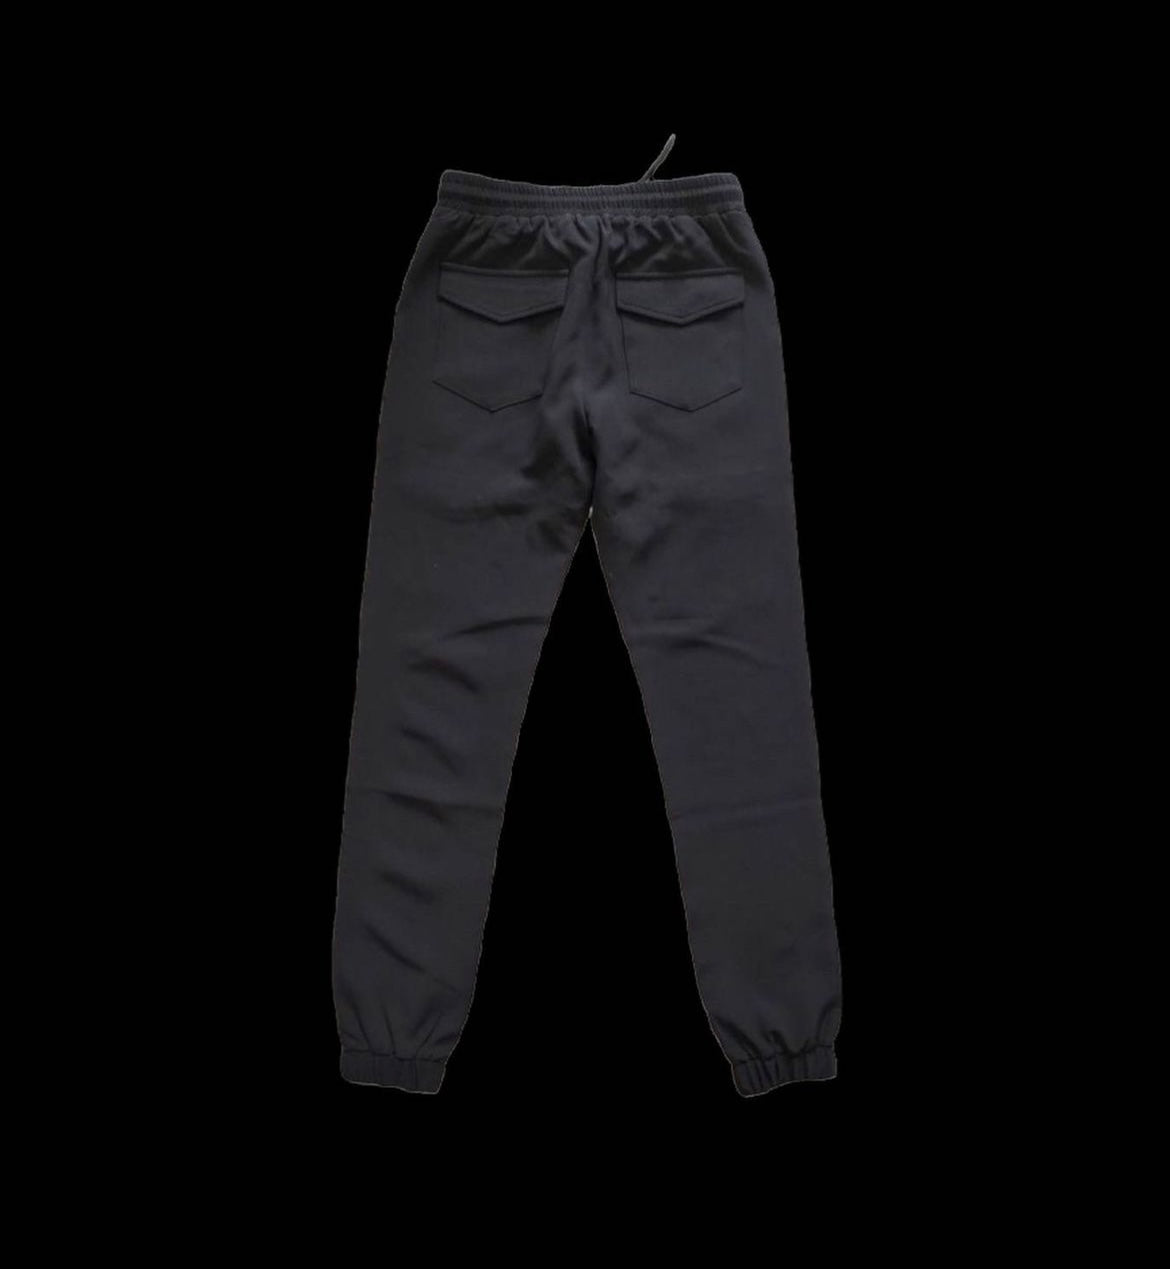 Deluxe cargo pants 🤩 - [Swanky sets